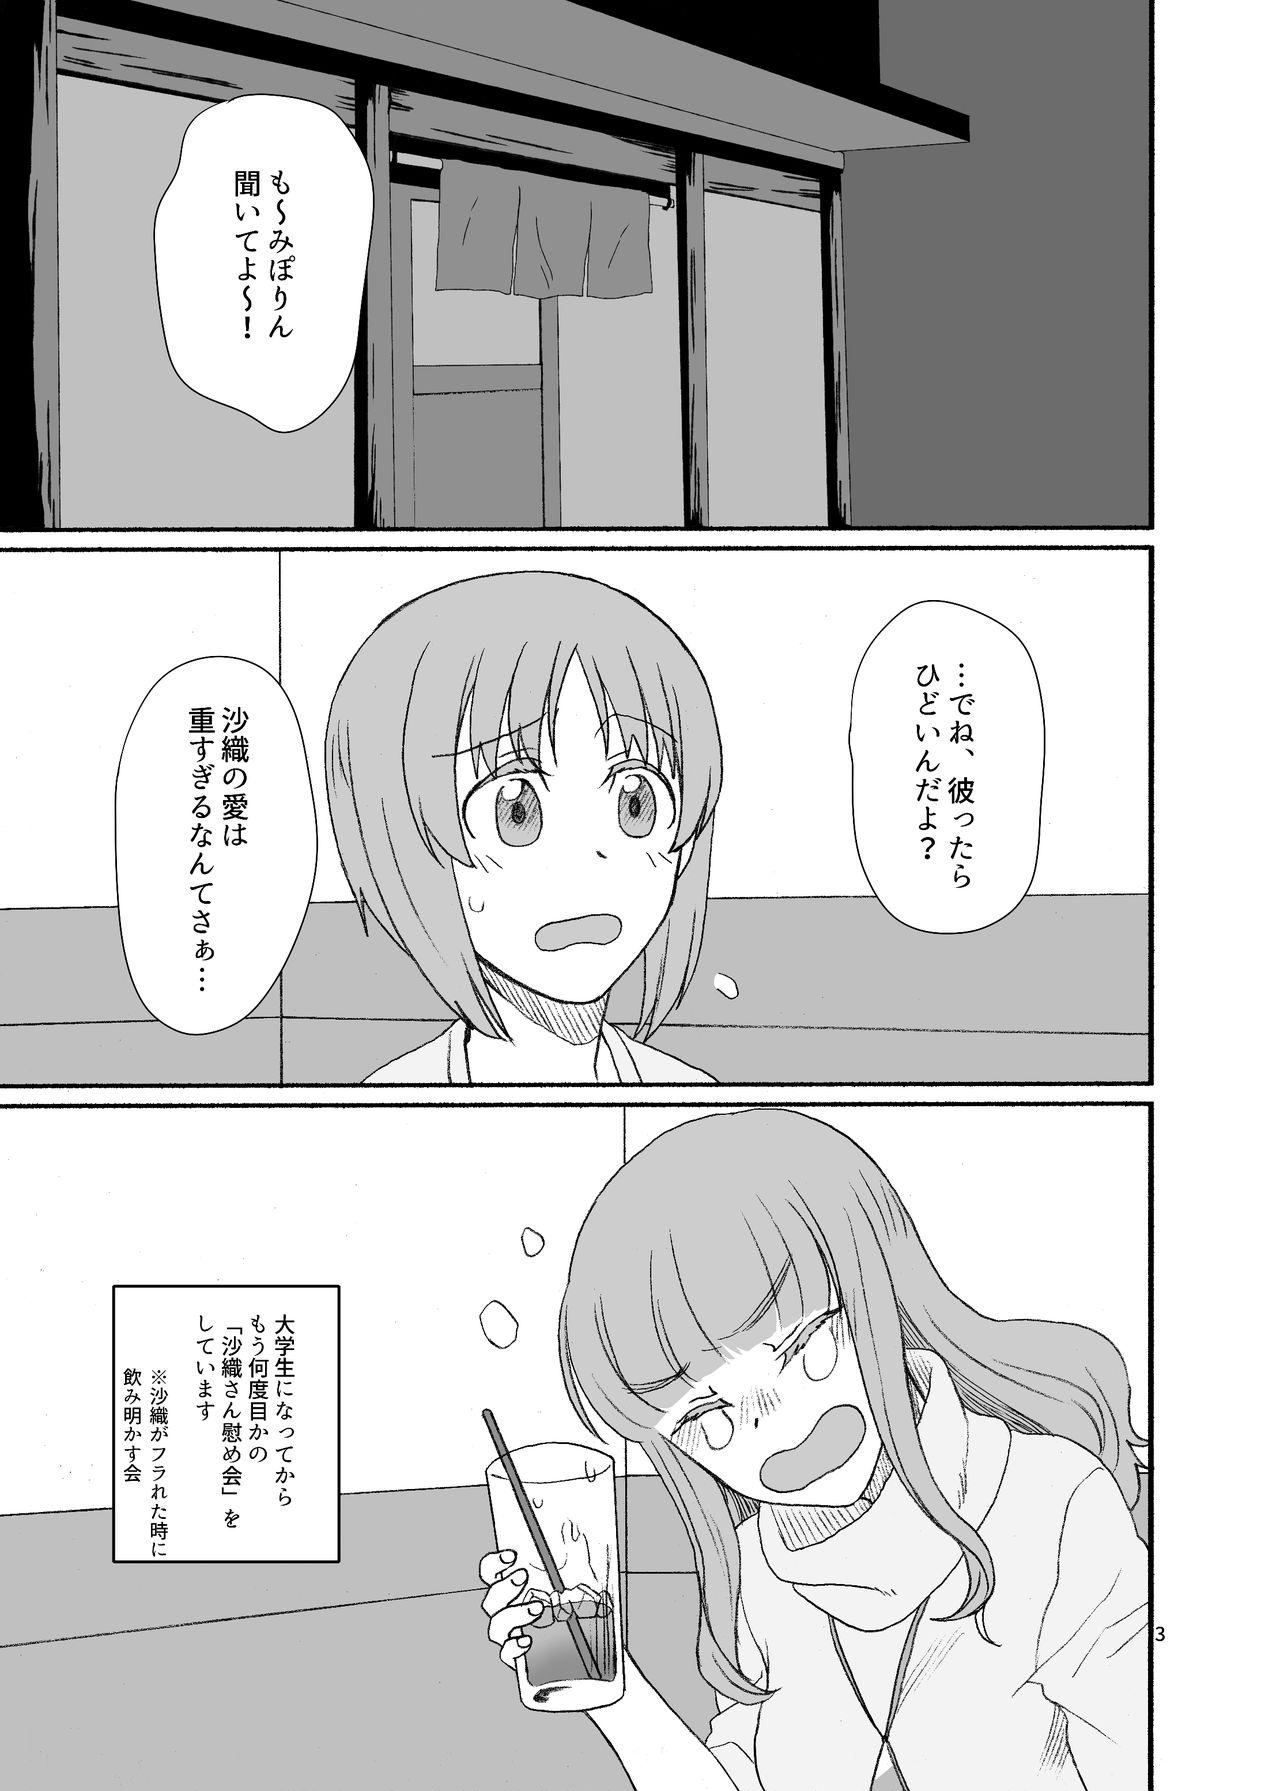 First Time Saori-san, Tsukiatte Kudasai! - Girls und panzer Pounded - Page 2